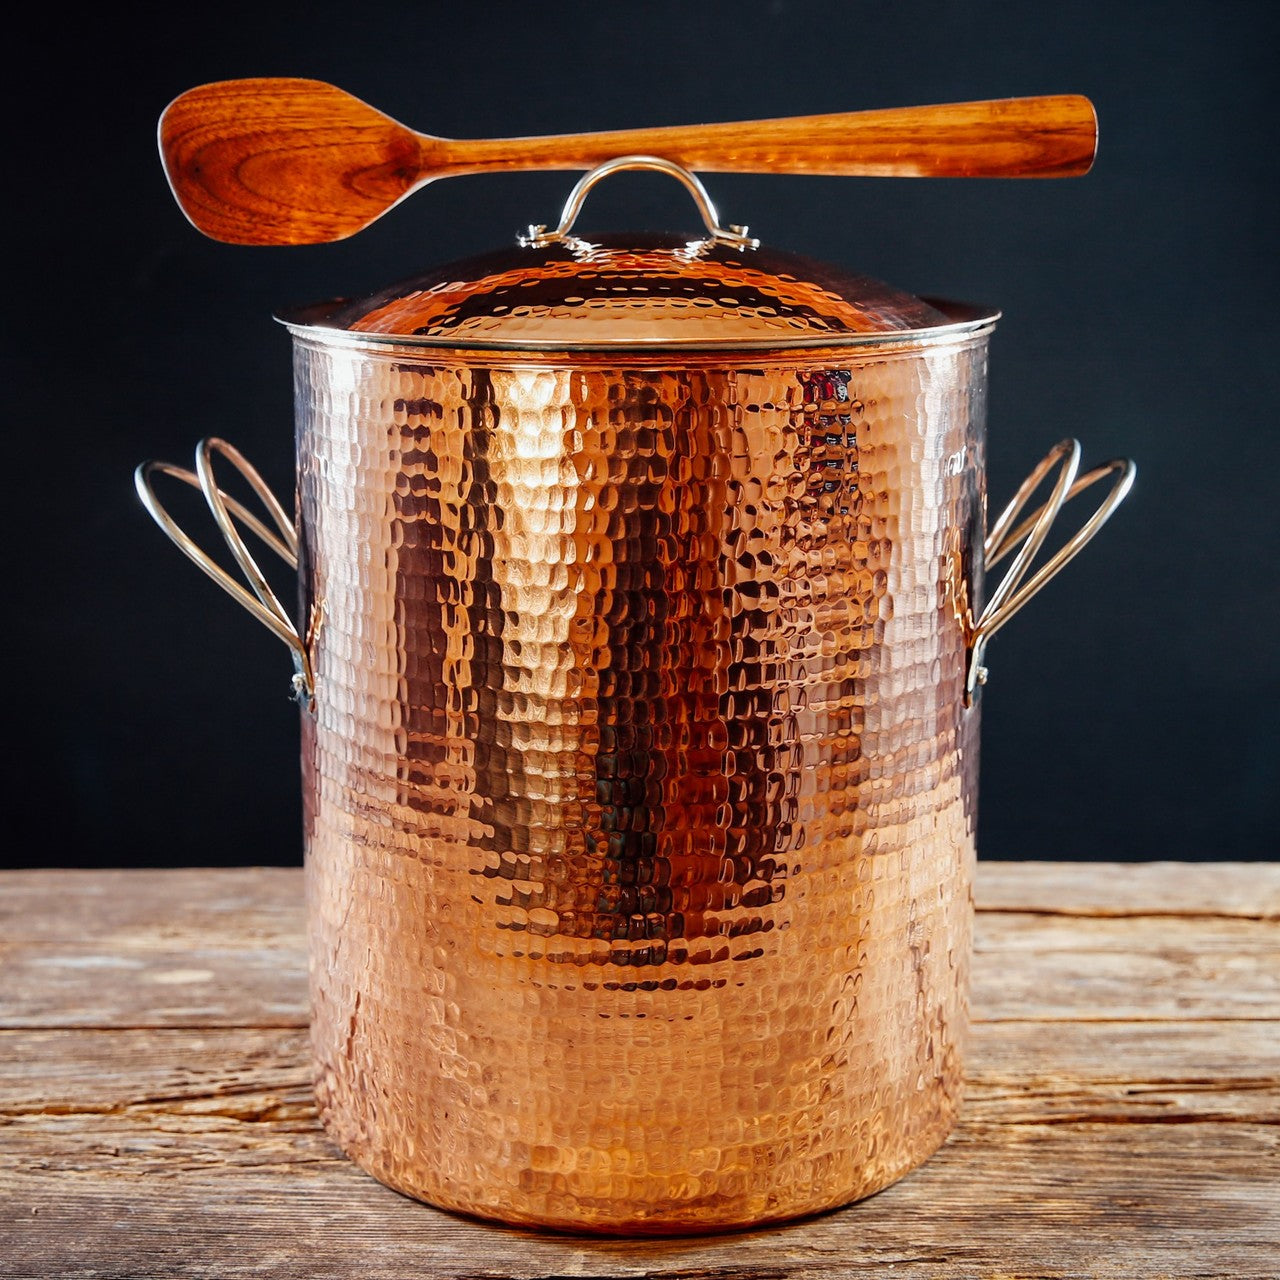 Hammered Copper Skillets | Copper Pans | Copper Cookware 10 Diameter / Polished Finish